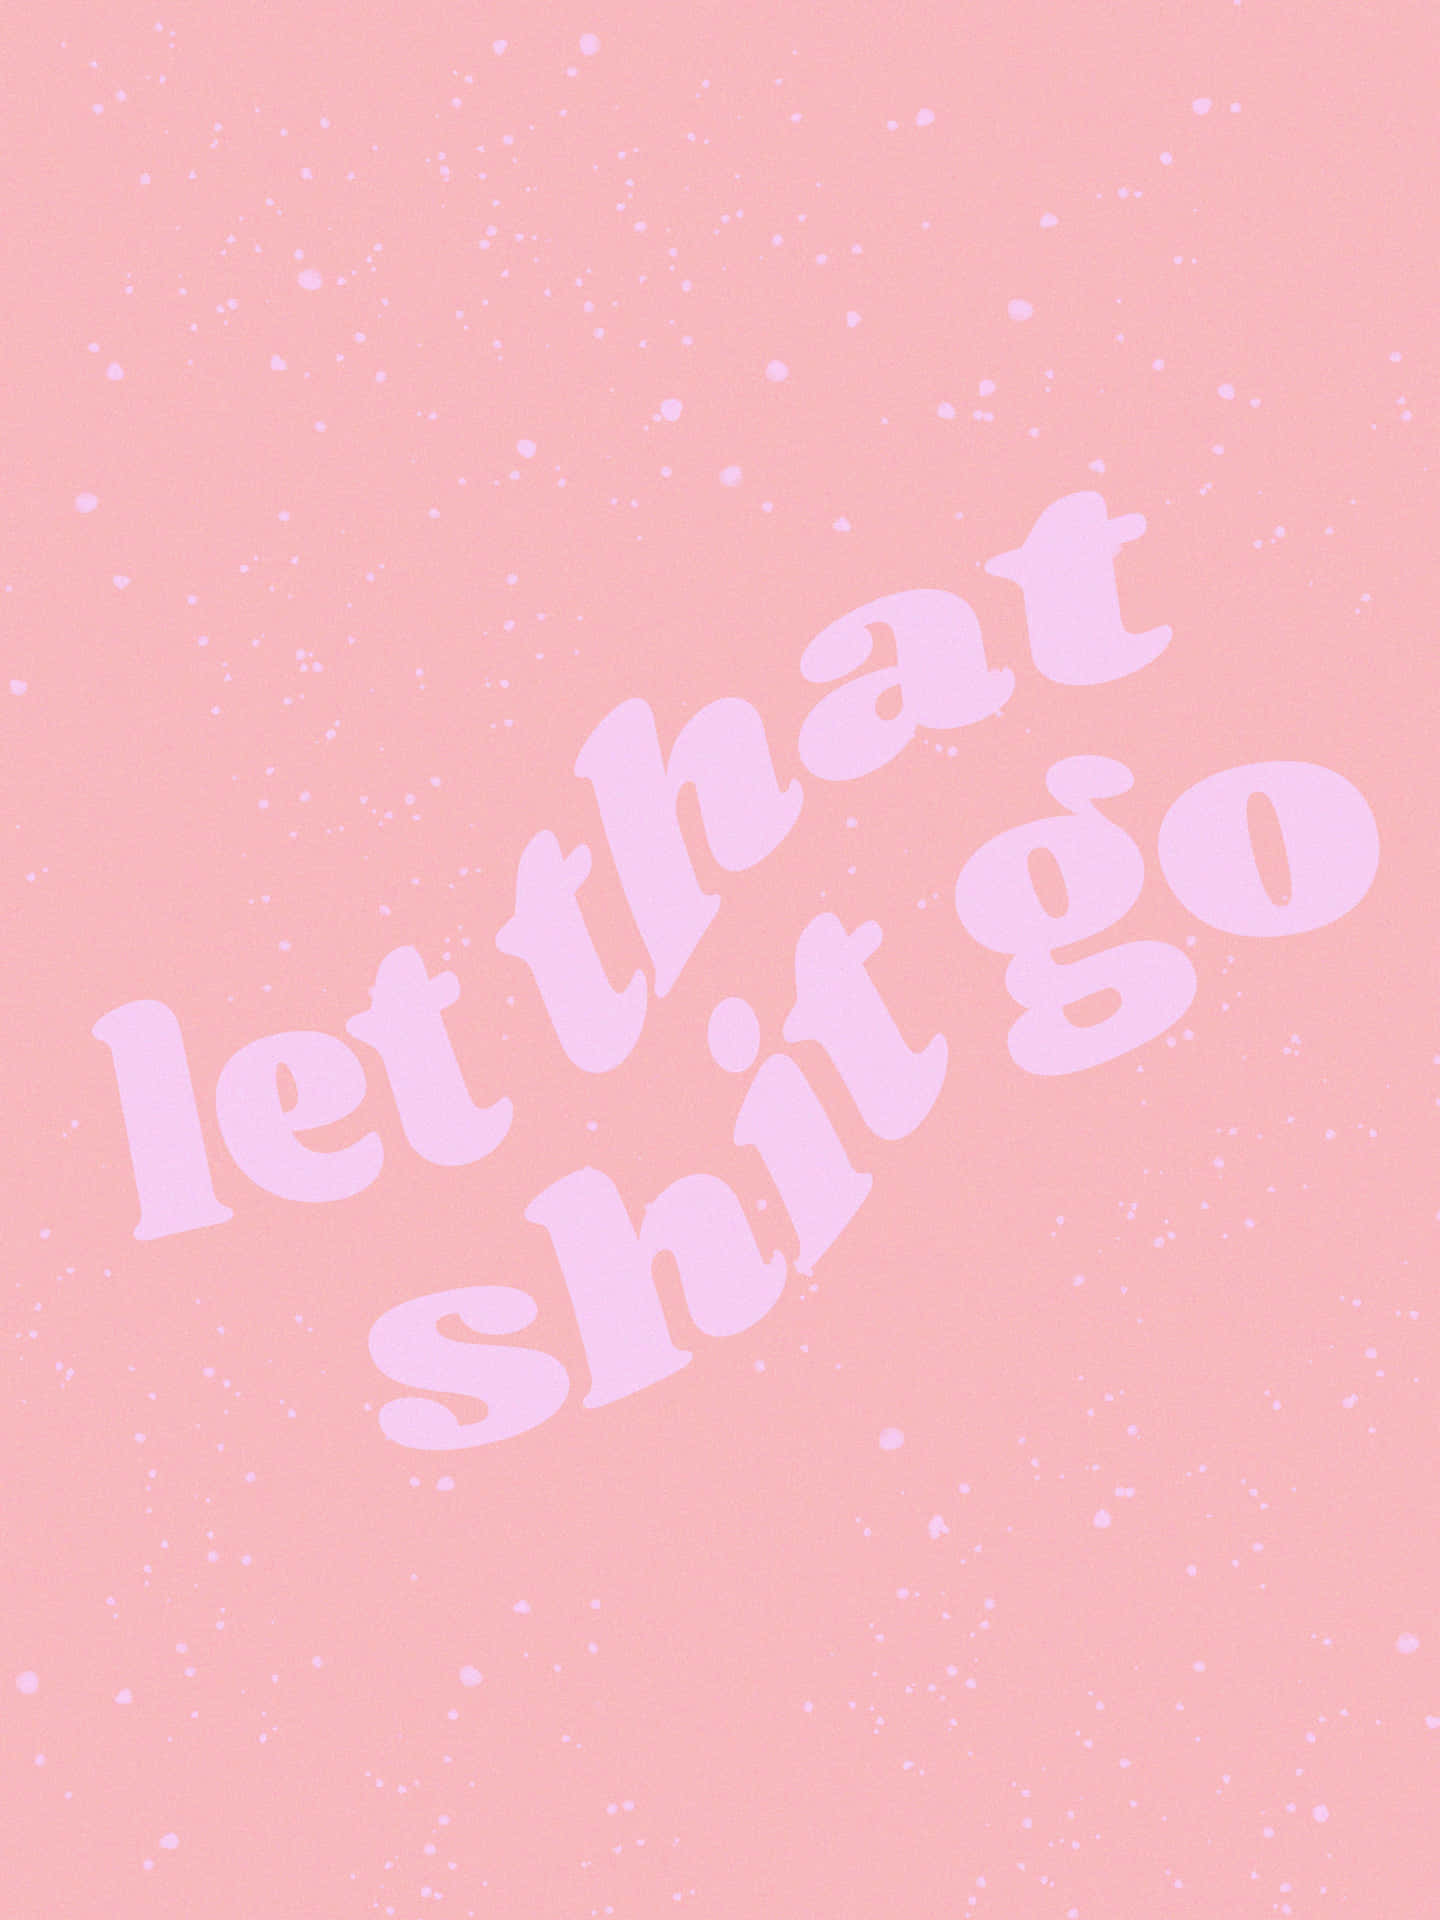 Let It Go Pink Background